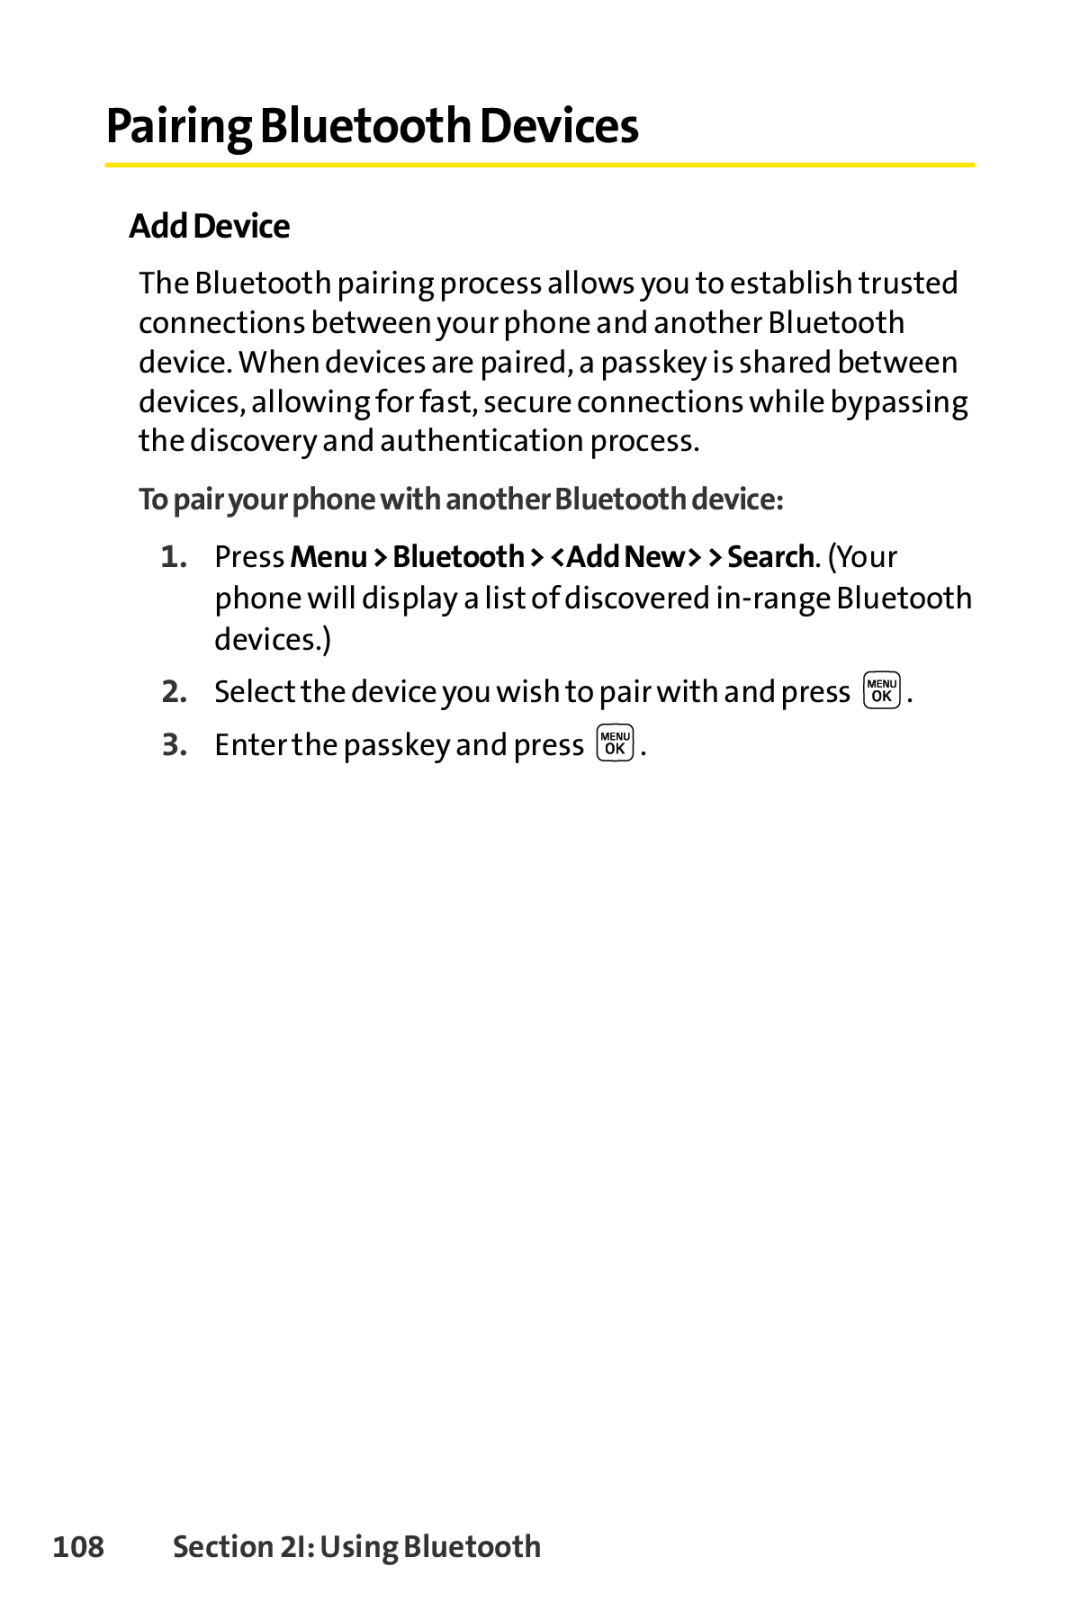 Sprint Nextel LX160 PairingBluetooth Devices, AddDevice, TopairyourphonewithanotherBluetoothdevice, I Using Bluetooth 